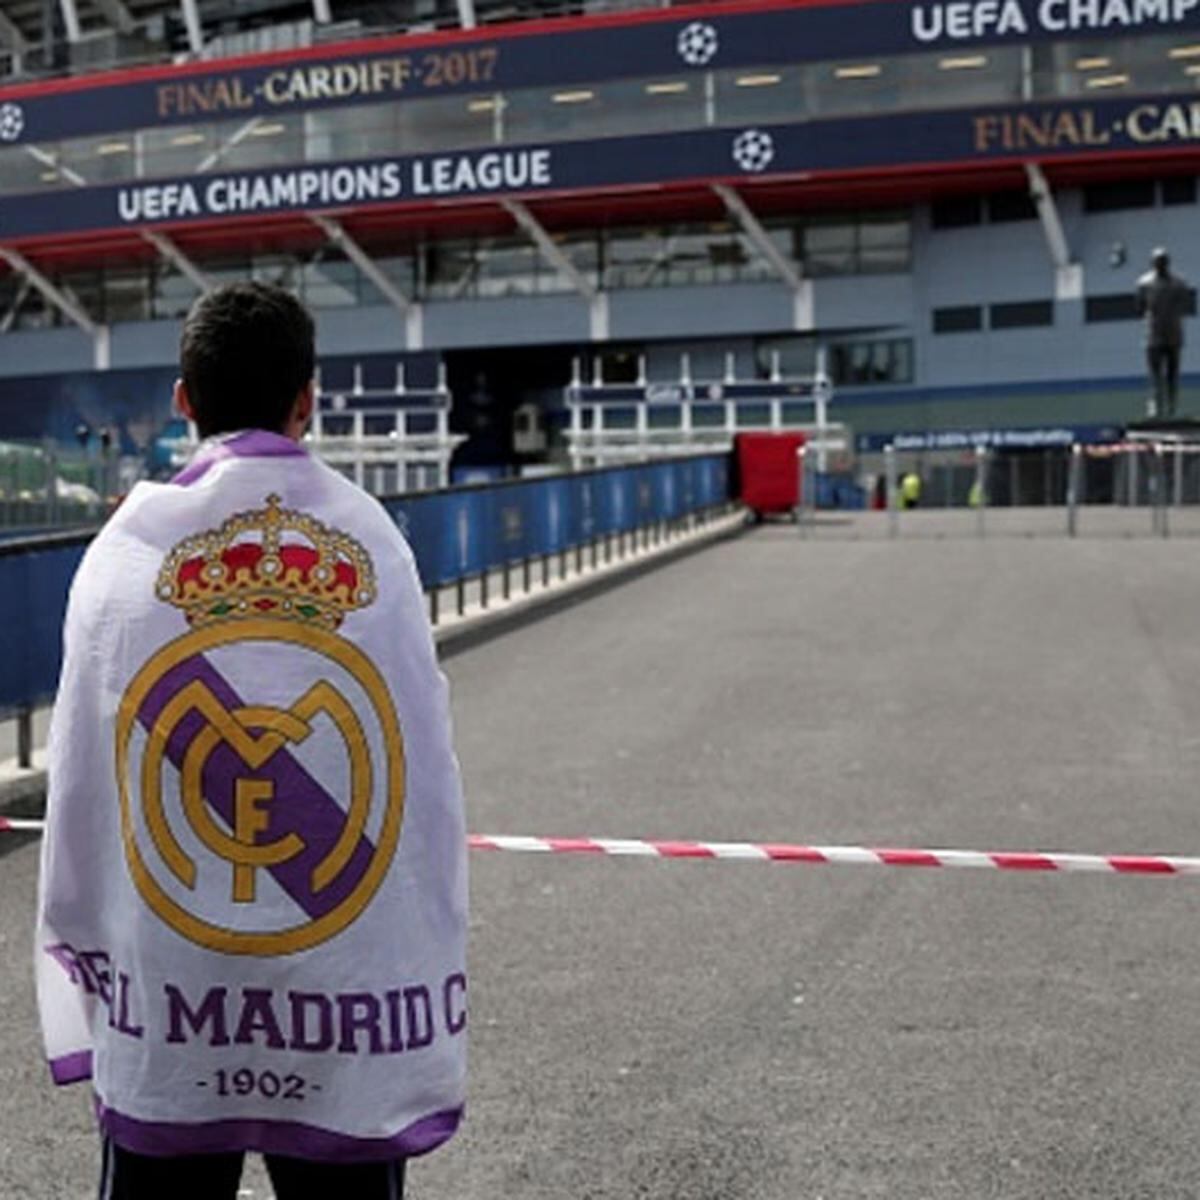 Desvelada la camiseta del Real Madrid para la final de la Champions en  Cardiff